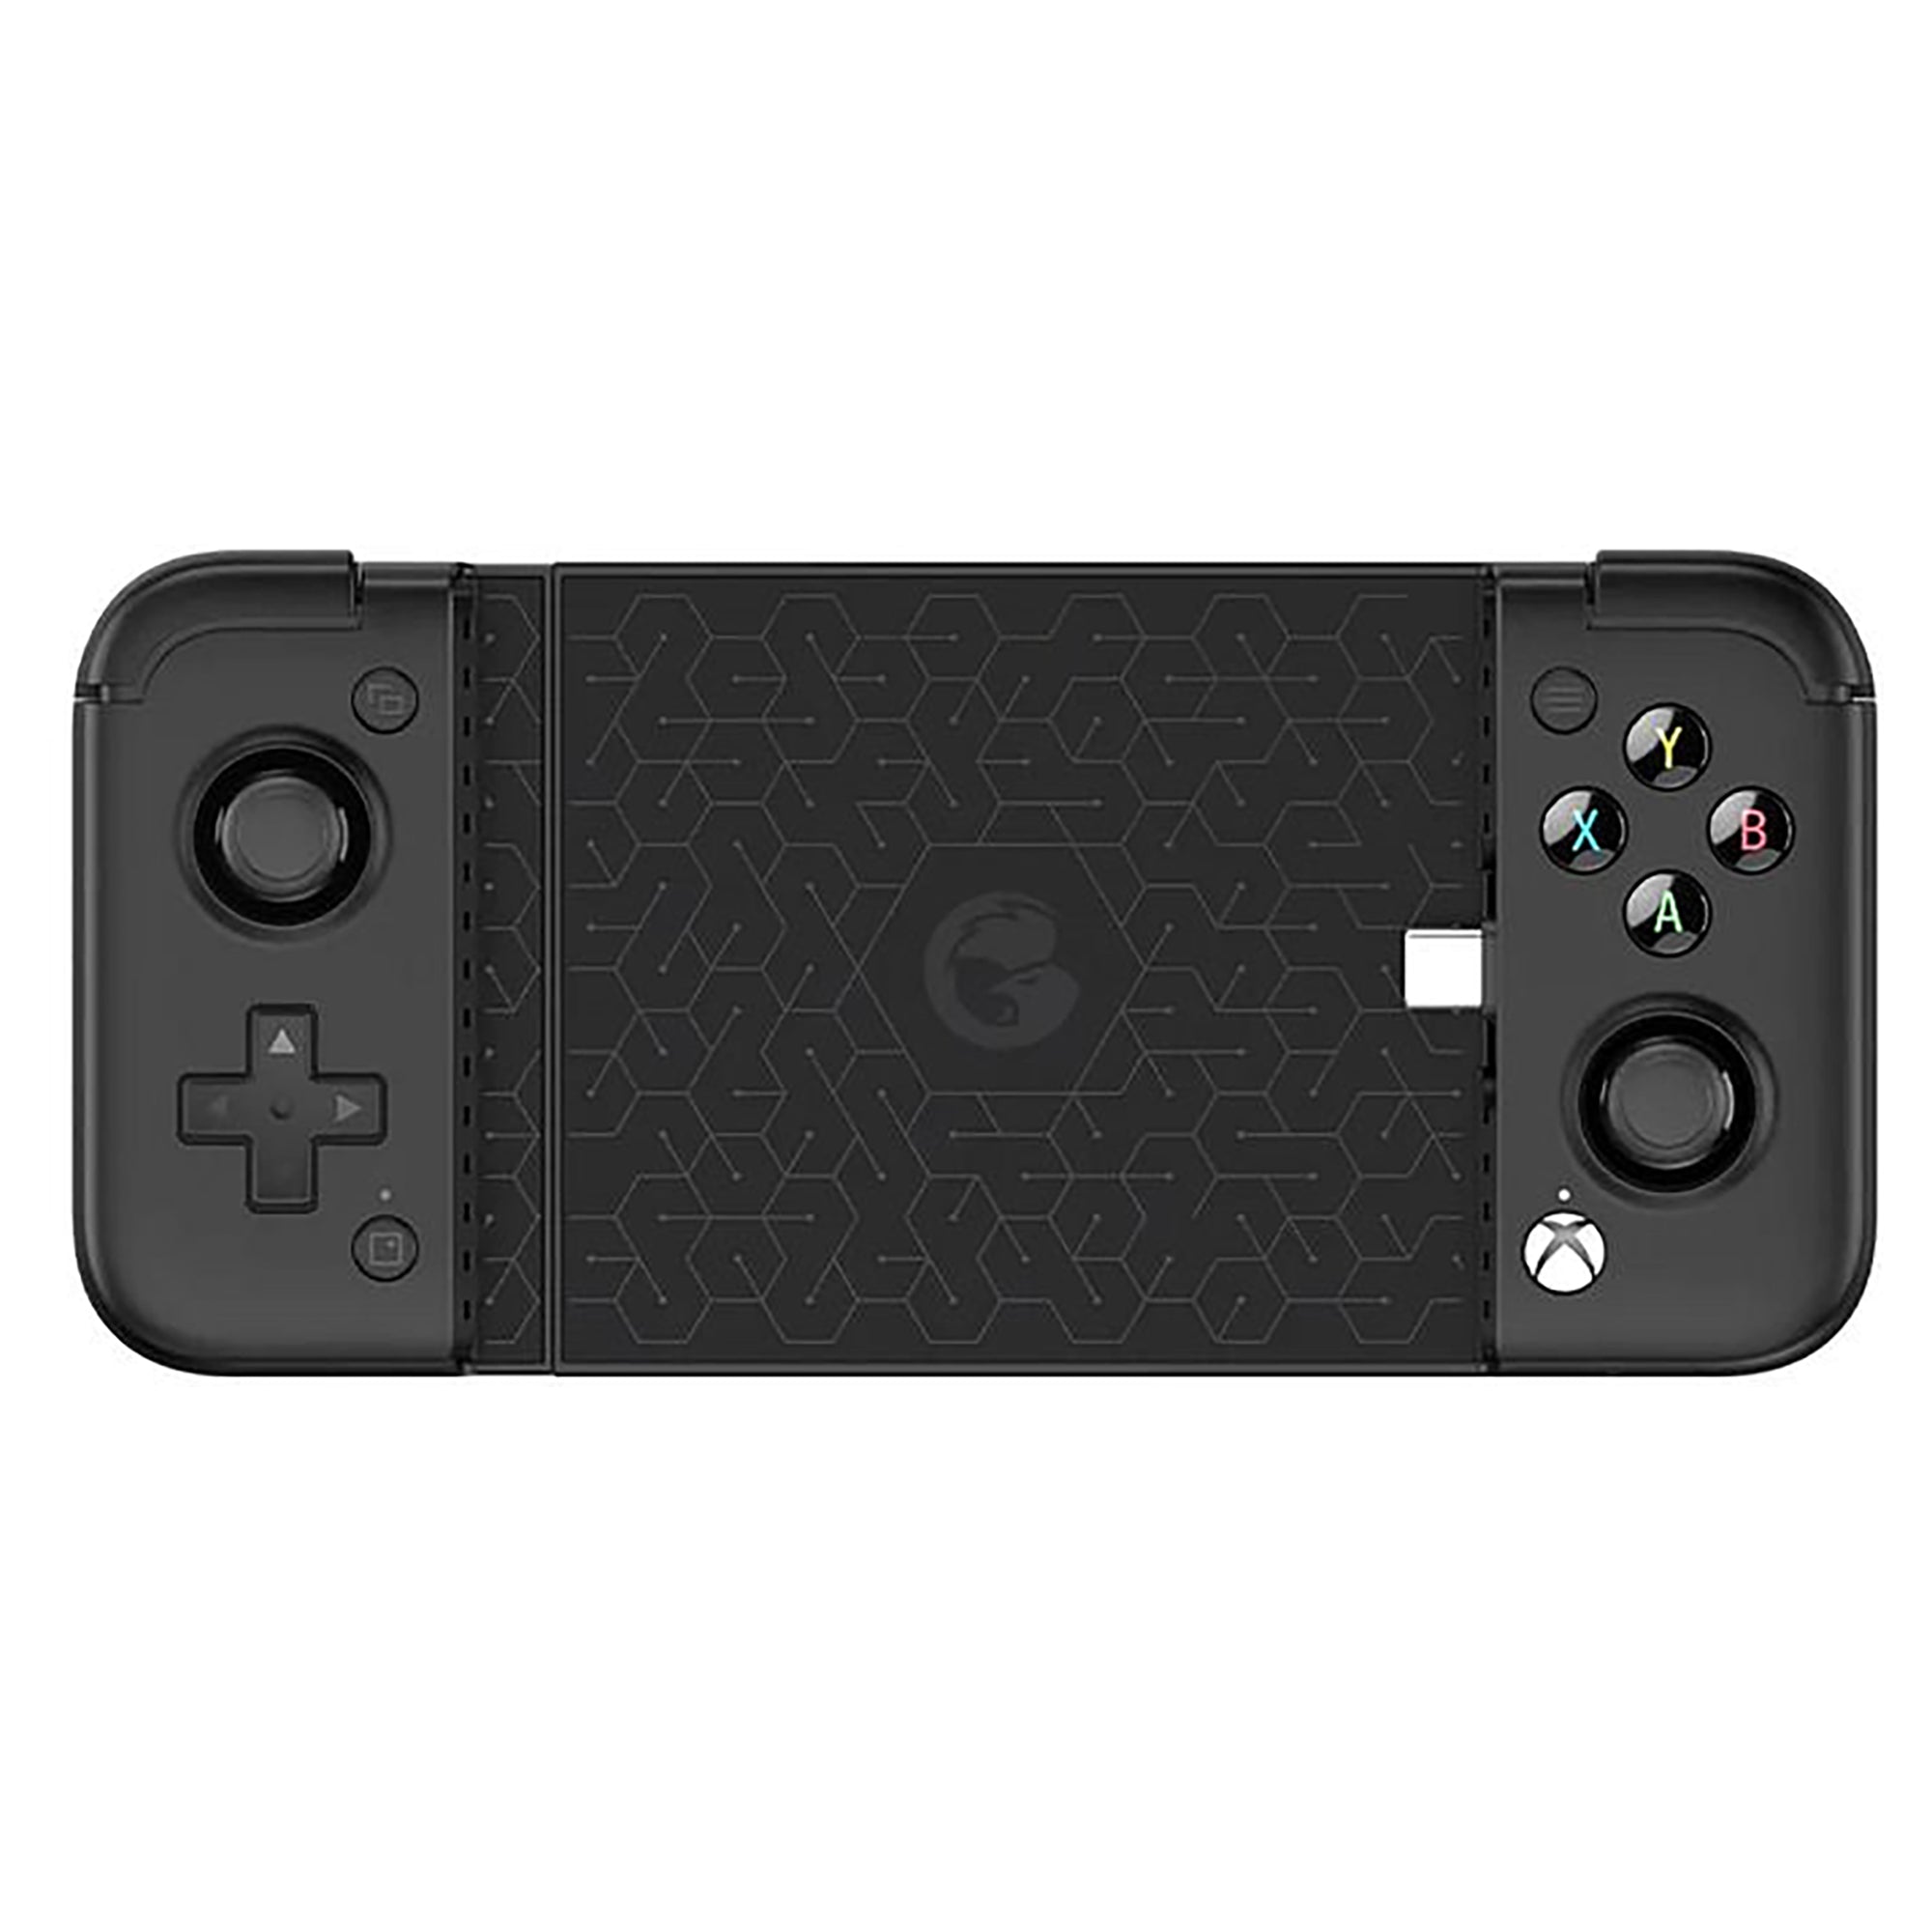 Gamesir X2 Pro Xbox Mobile Game Controller, Black